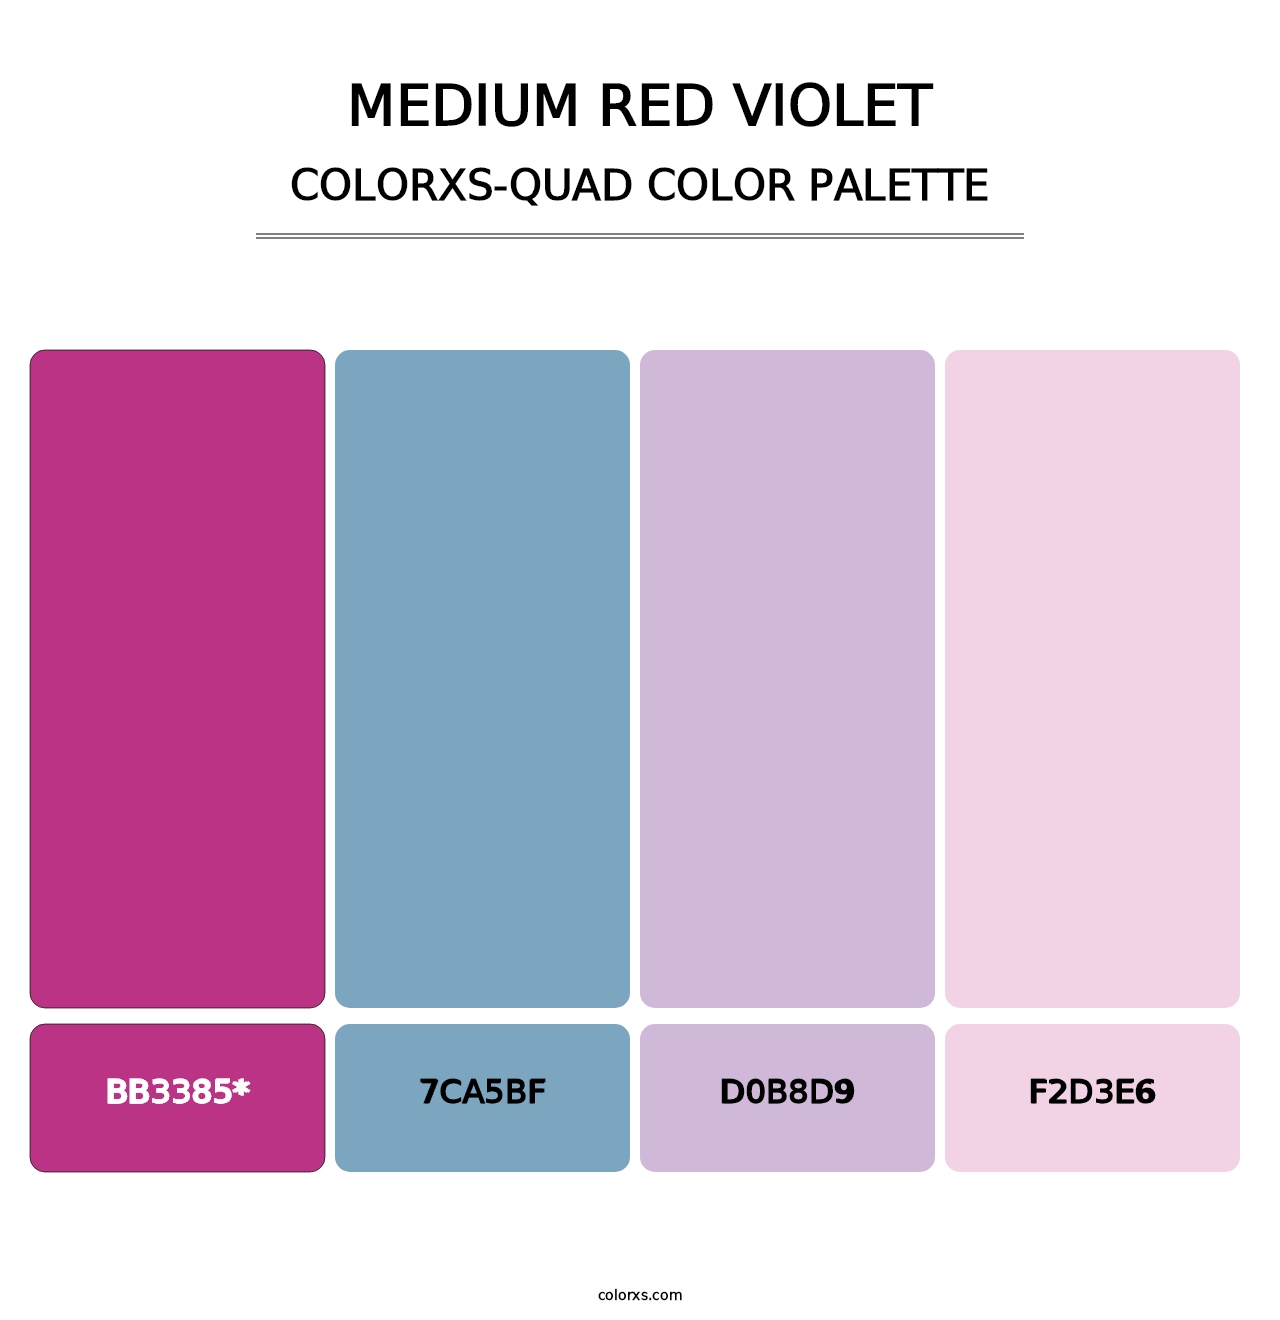 Medium Red Violet - Colorxs Quad Palette